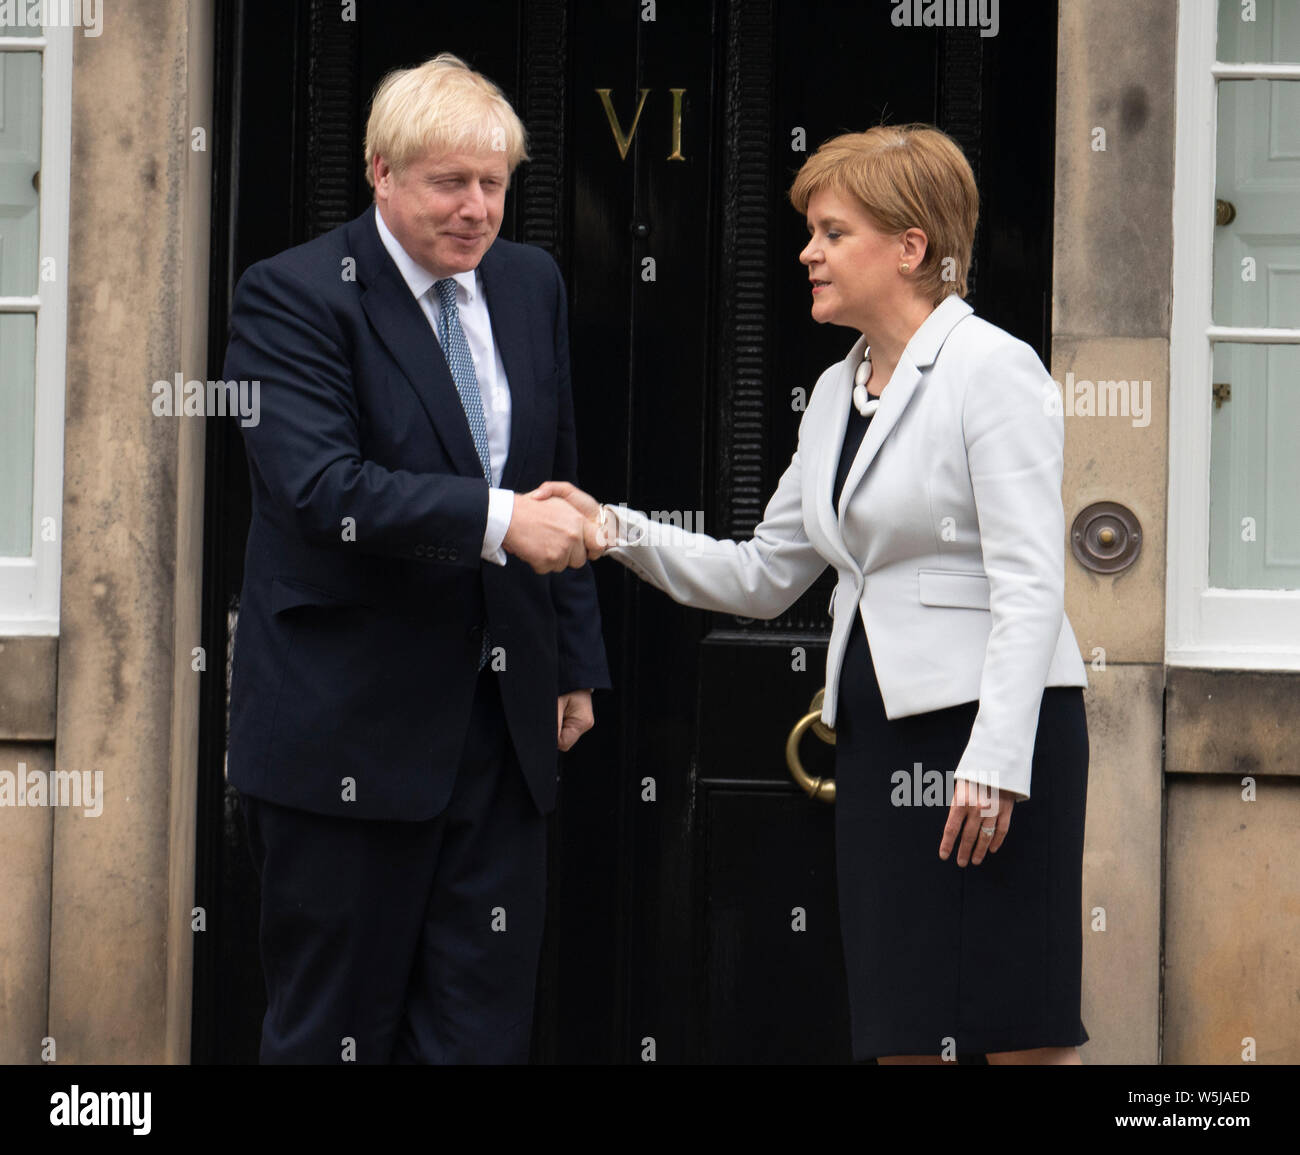 Edinburgh, Scotland, UK. 29th July, 2019. Prime Minister Boris Johnson meets Scotland's First Minister Nicola Sturgeon at Bute House in Edinburgh on his visit to Scotland. Credit: Iain Masterton/Alamy Live News Stock Photo